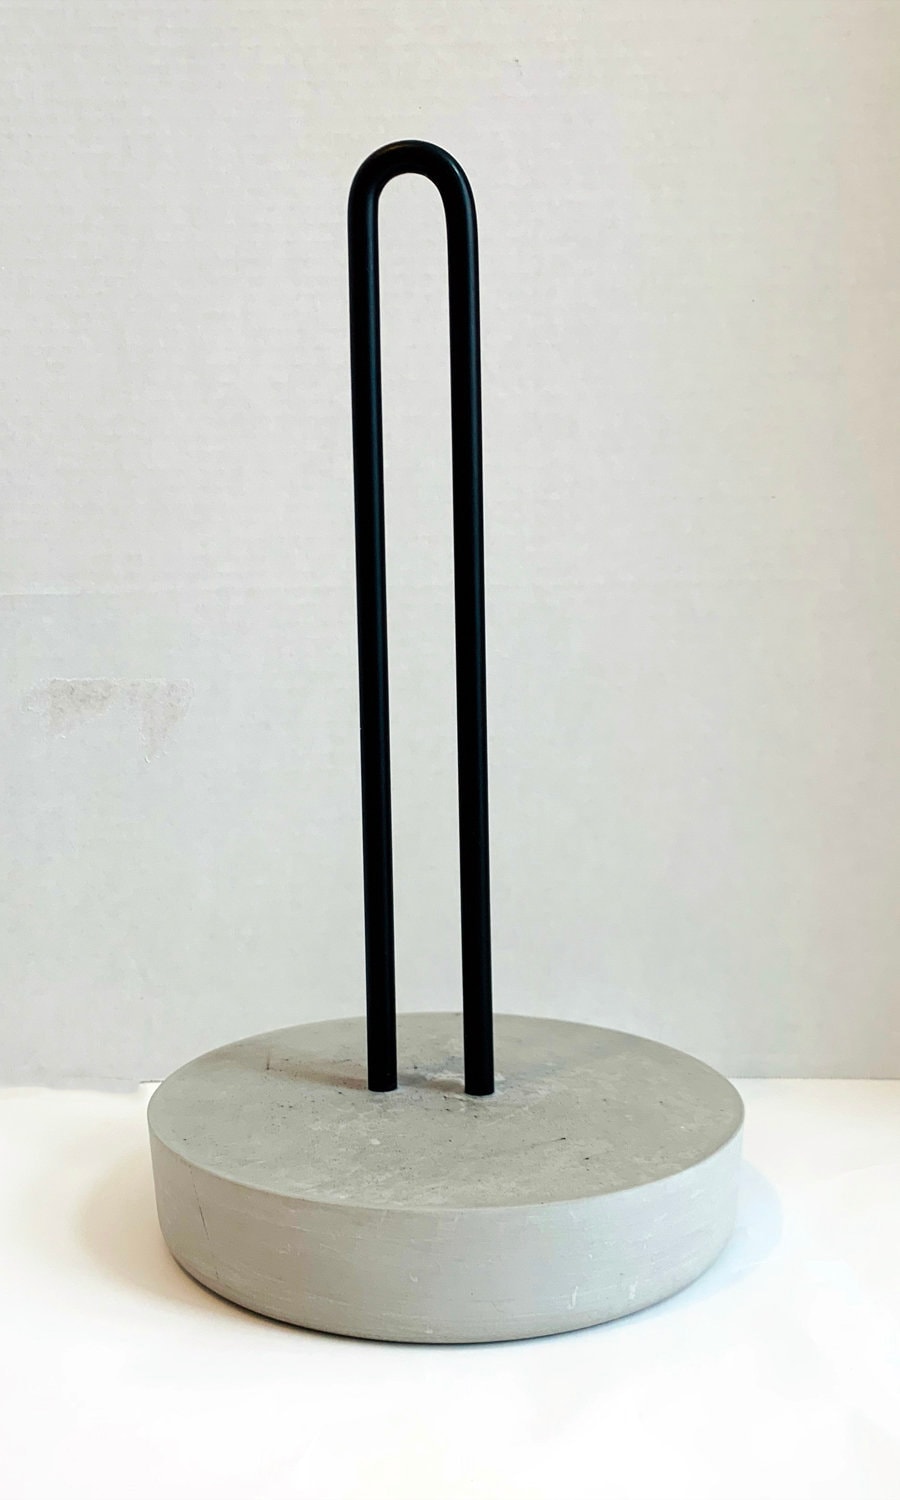 Paper Towel Holder with Concrete Base and Black pedestal